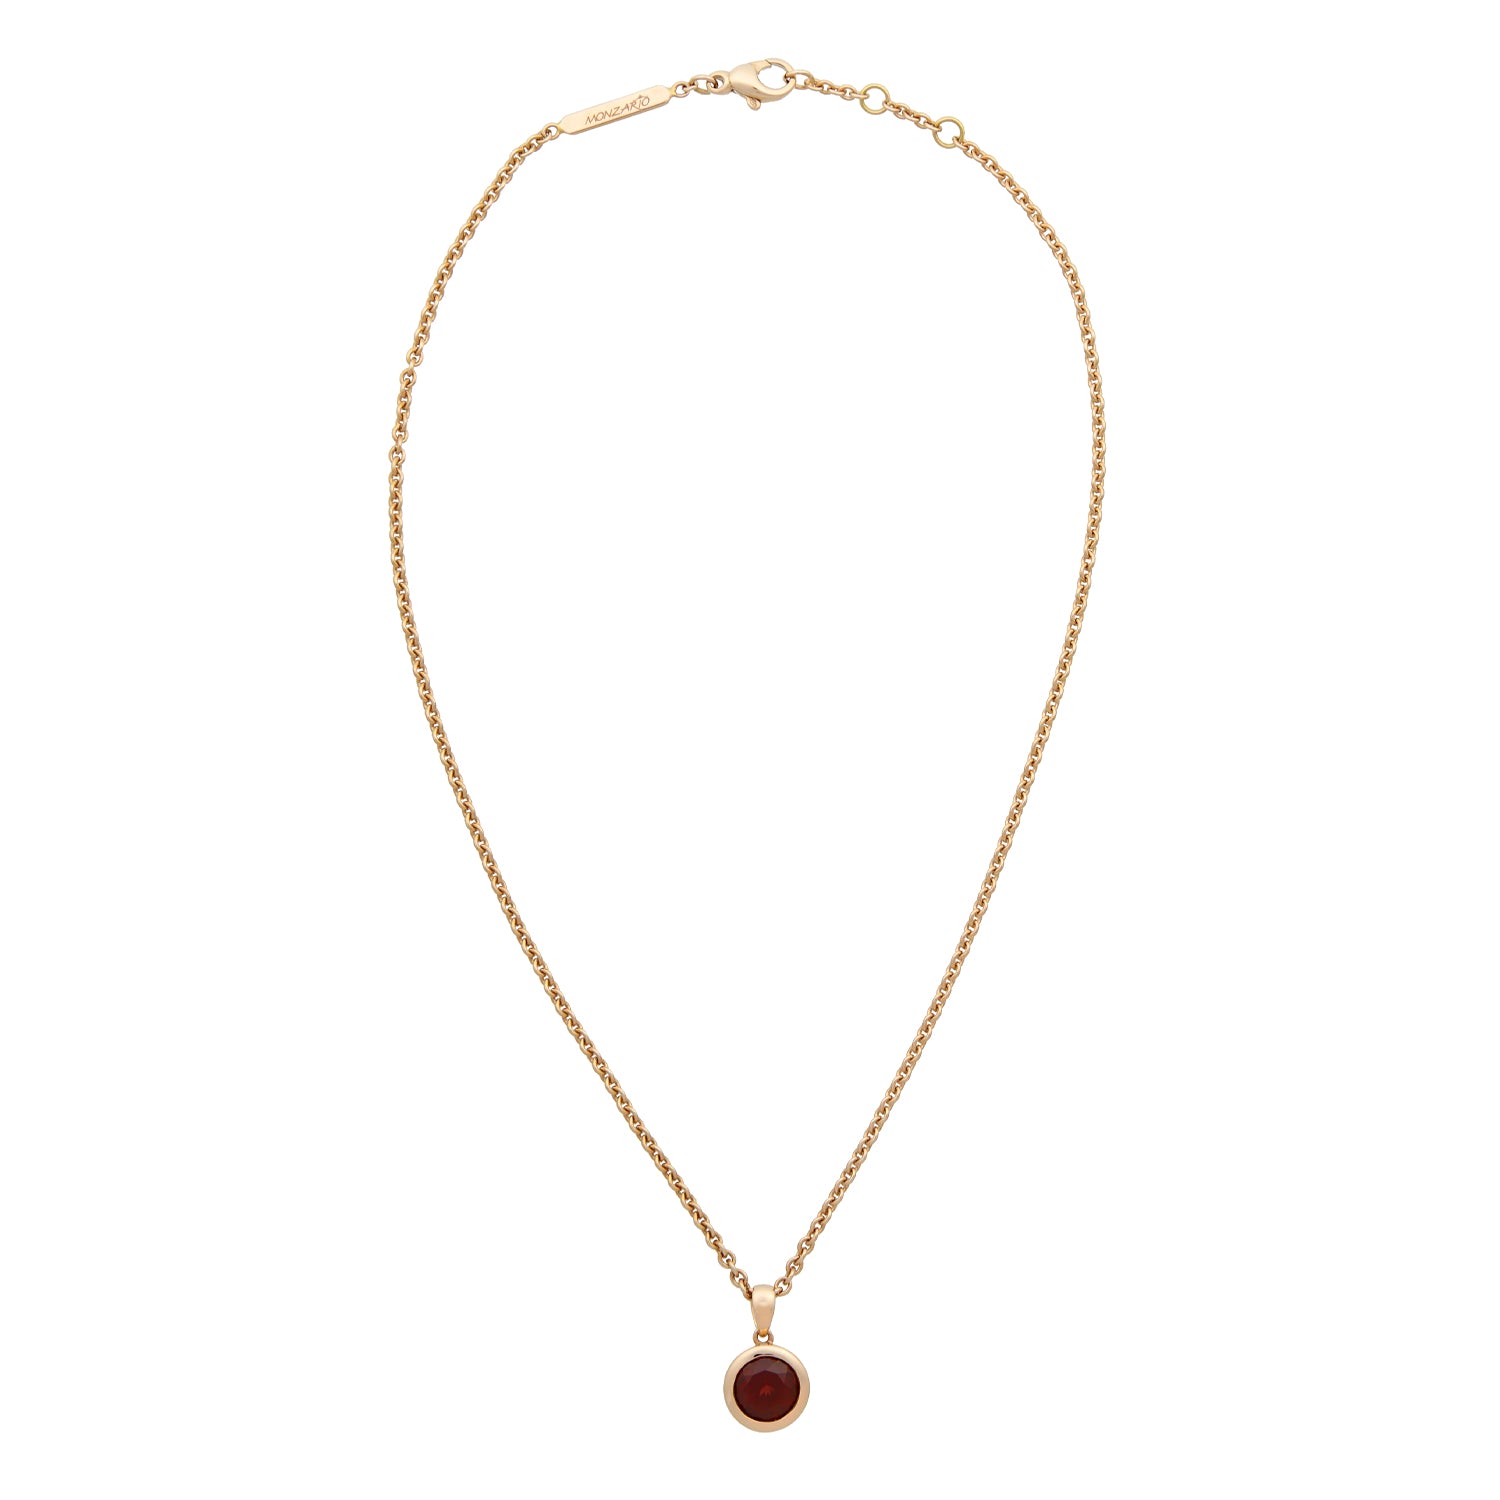 Necklace with round almandine pendant. (garnet variety)